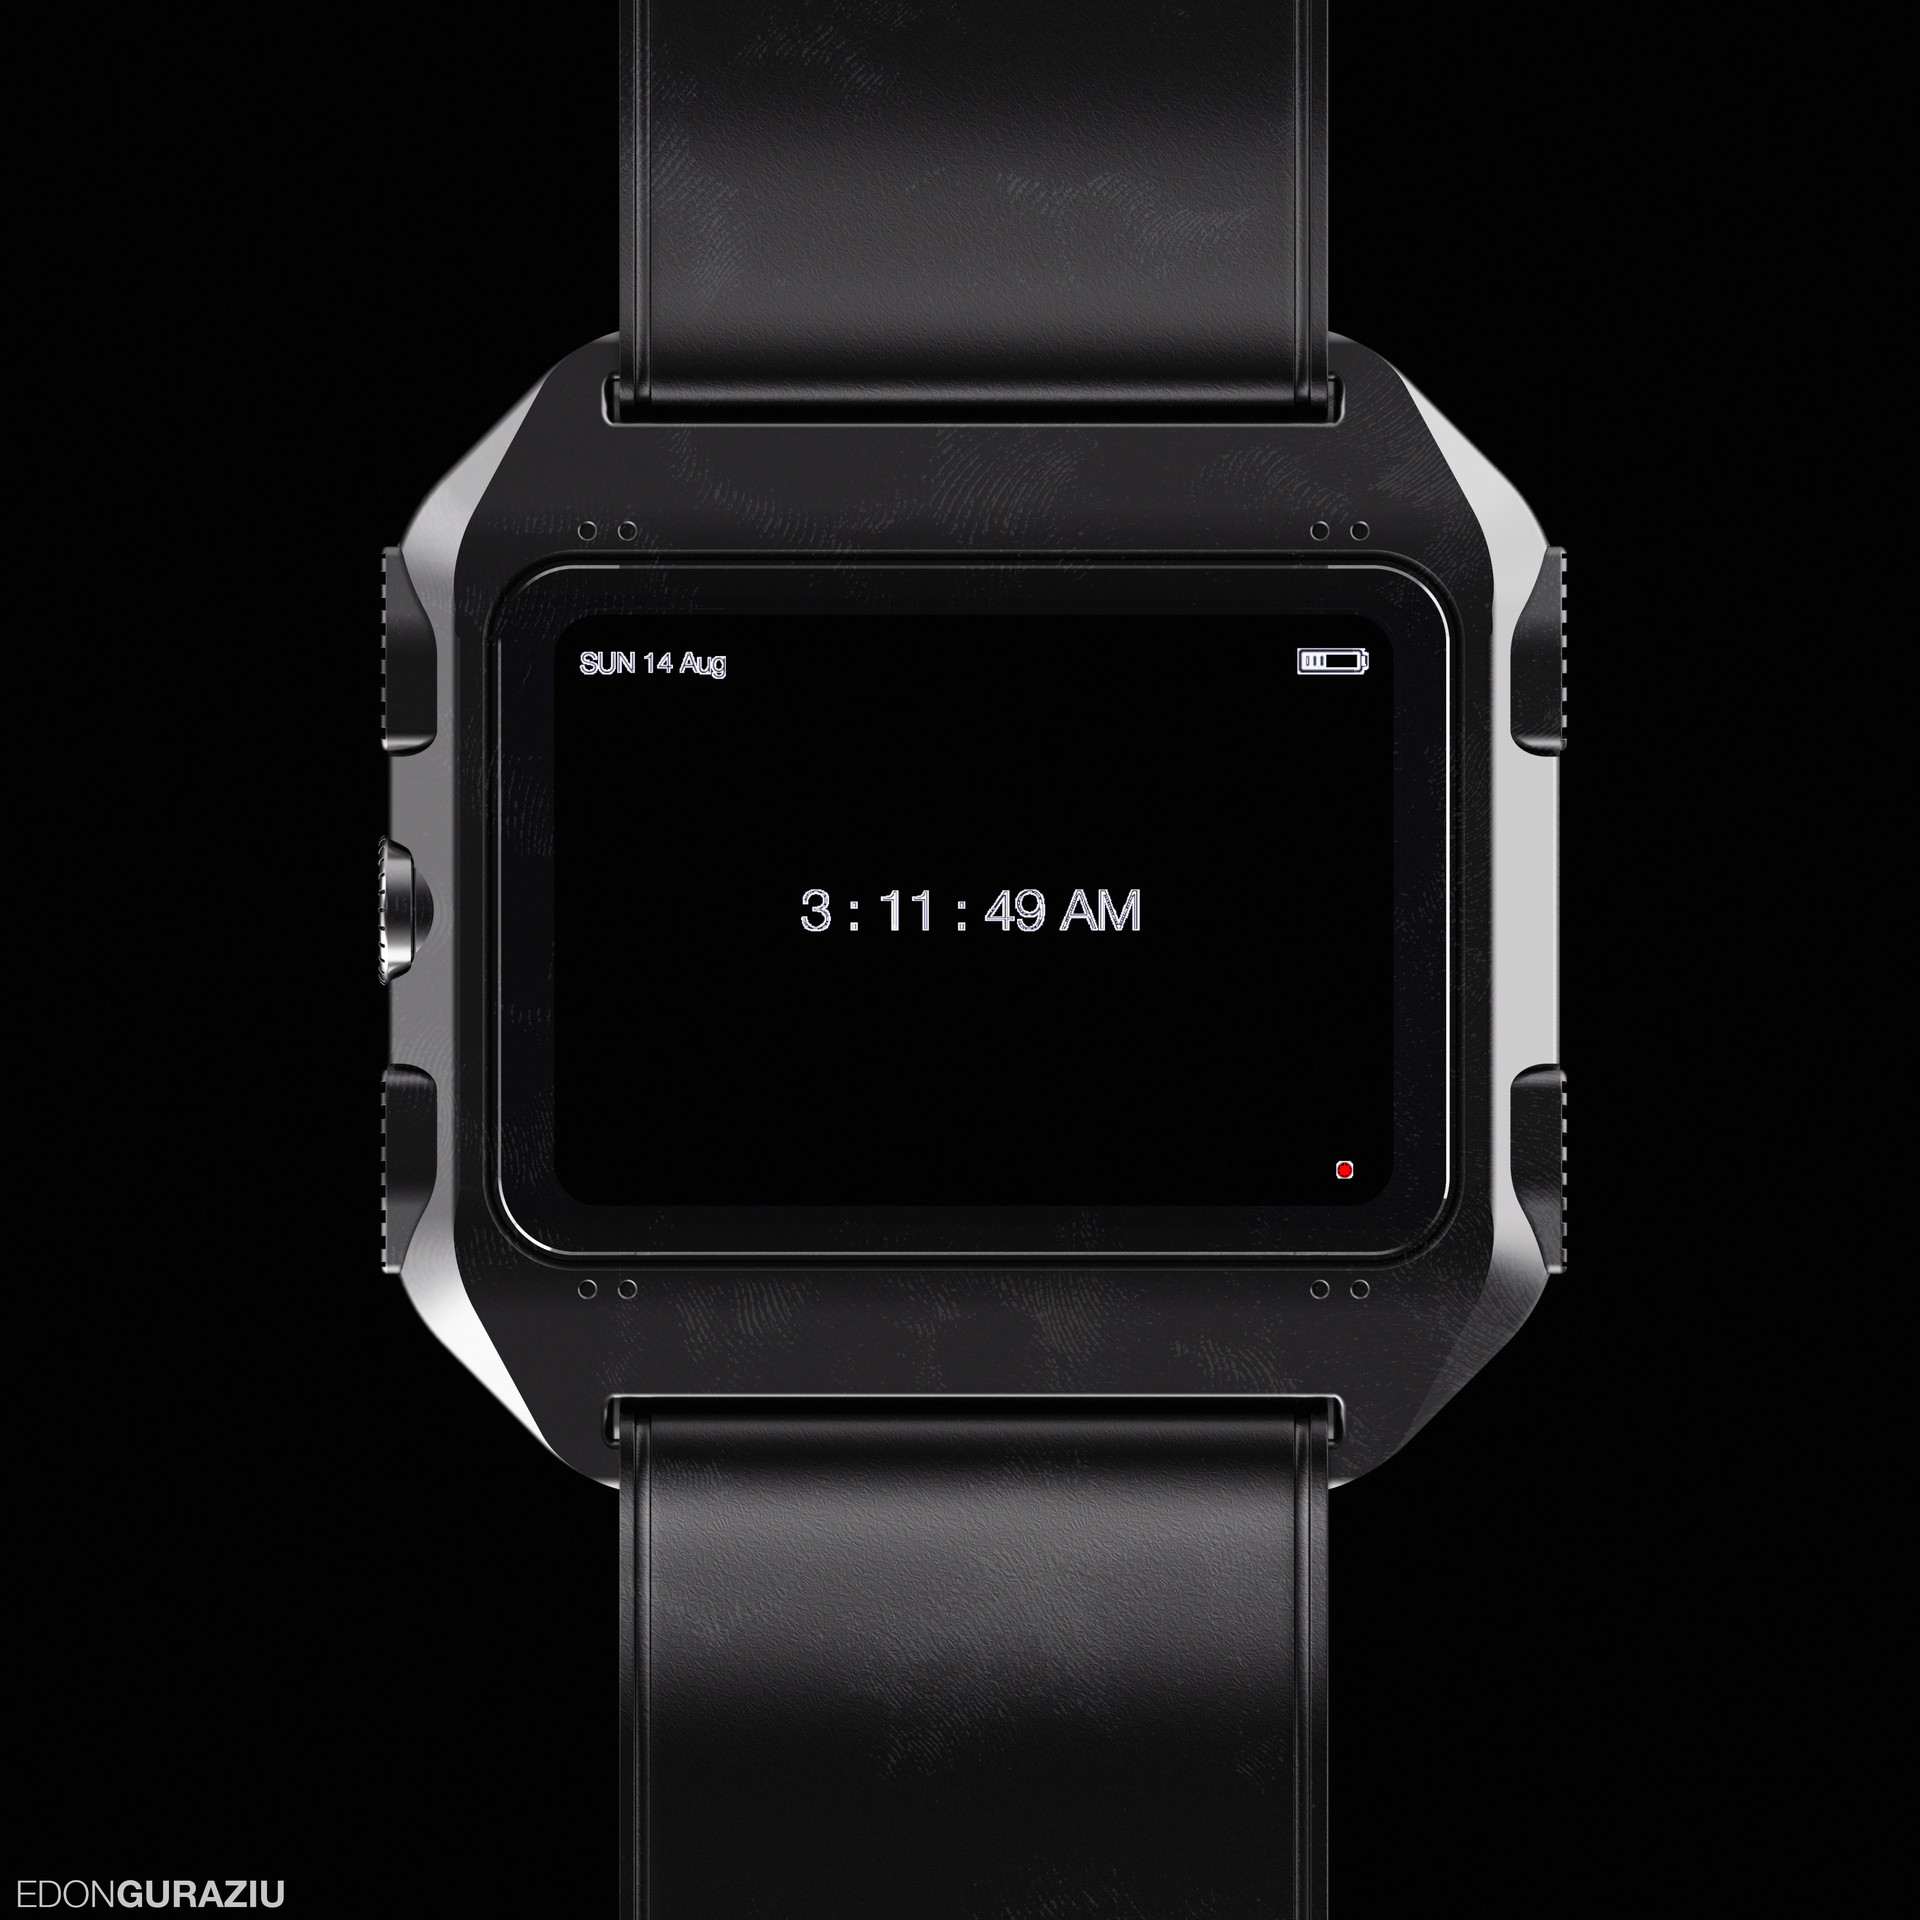 Edon Guraziu Concept Design - Modern Watch Design